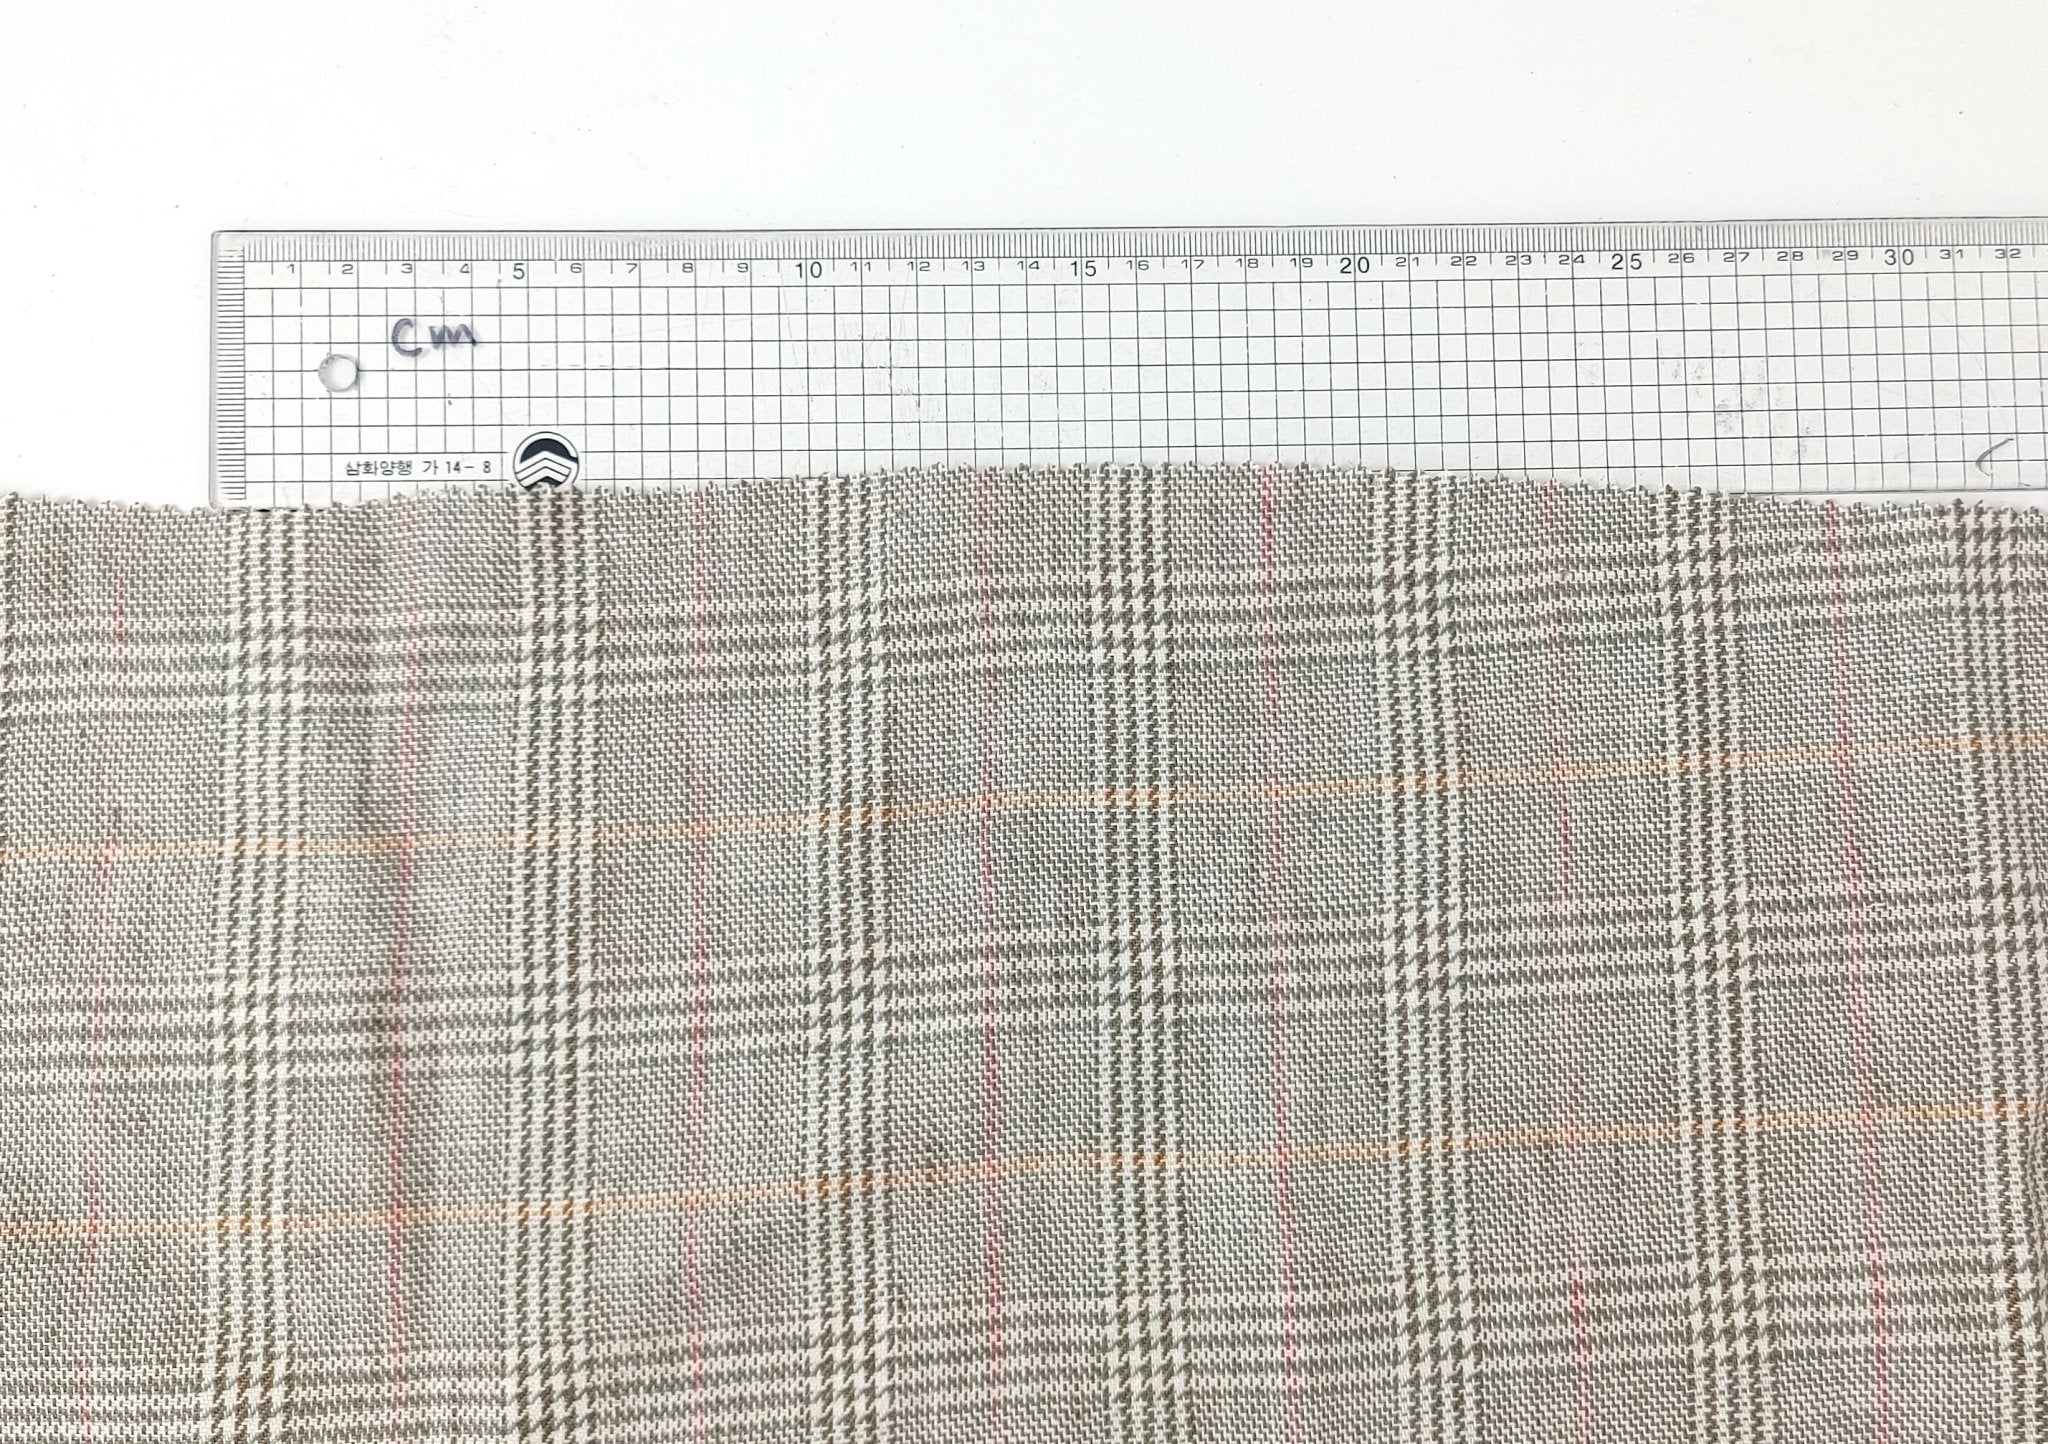 Glen Plaid Elegance: 100% Linen Twill Fabric, 9s Medium-Heavy Weight 2118 - The Linen Lab - Green